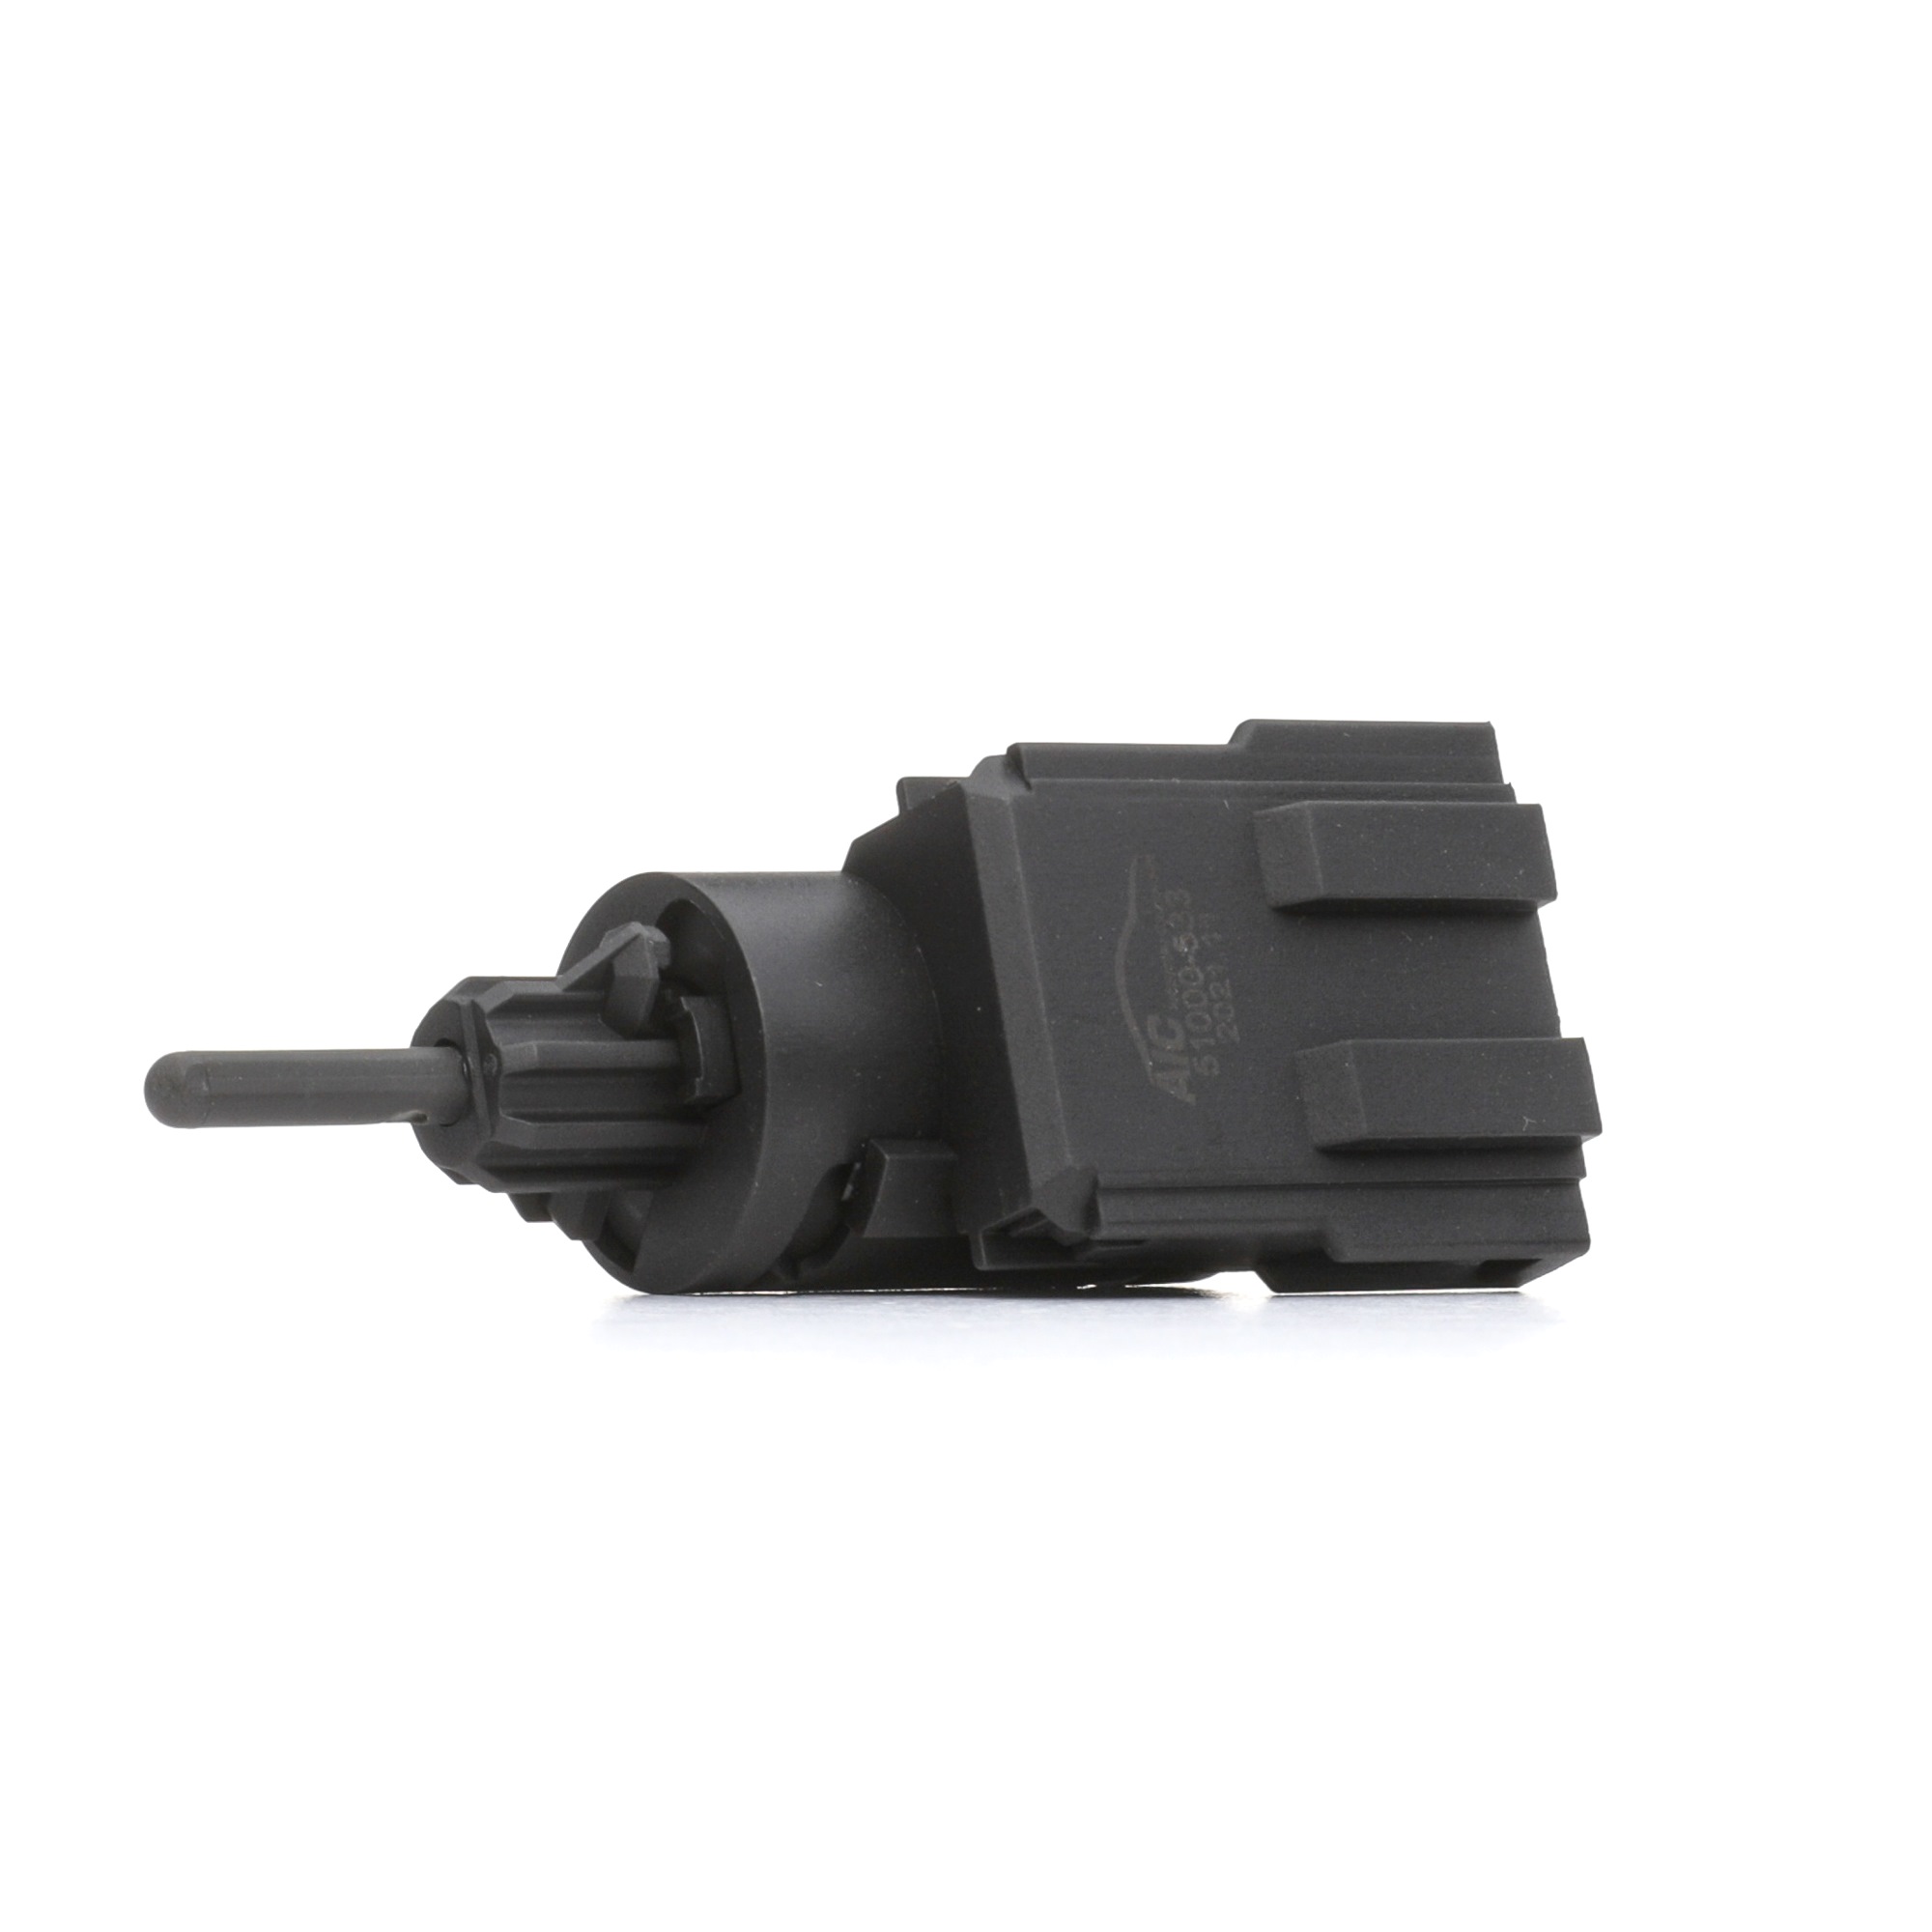 51000 AIC Brake Light Switch Mechanical, 4-pin connector